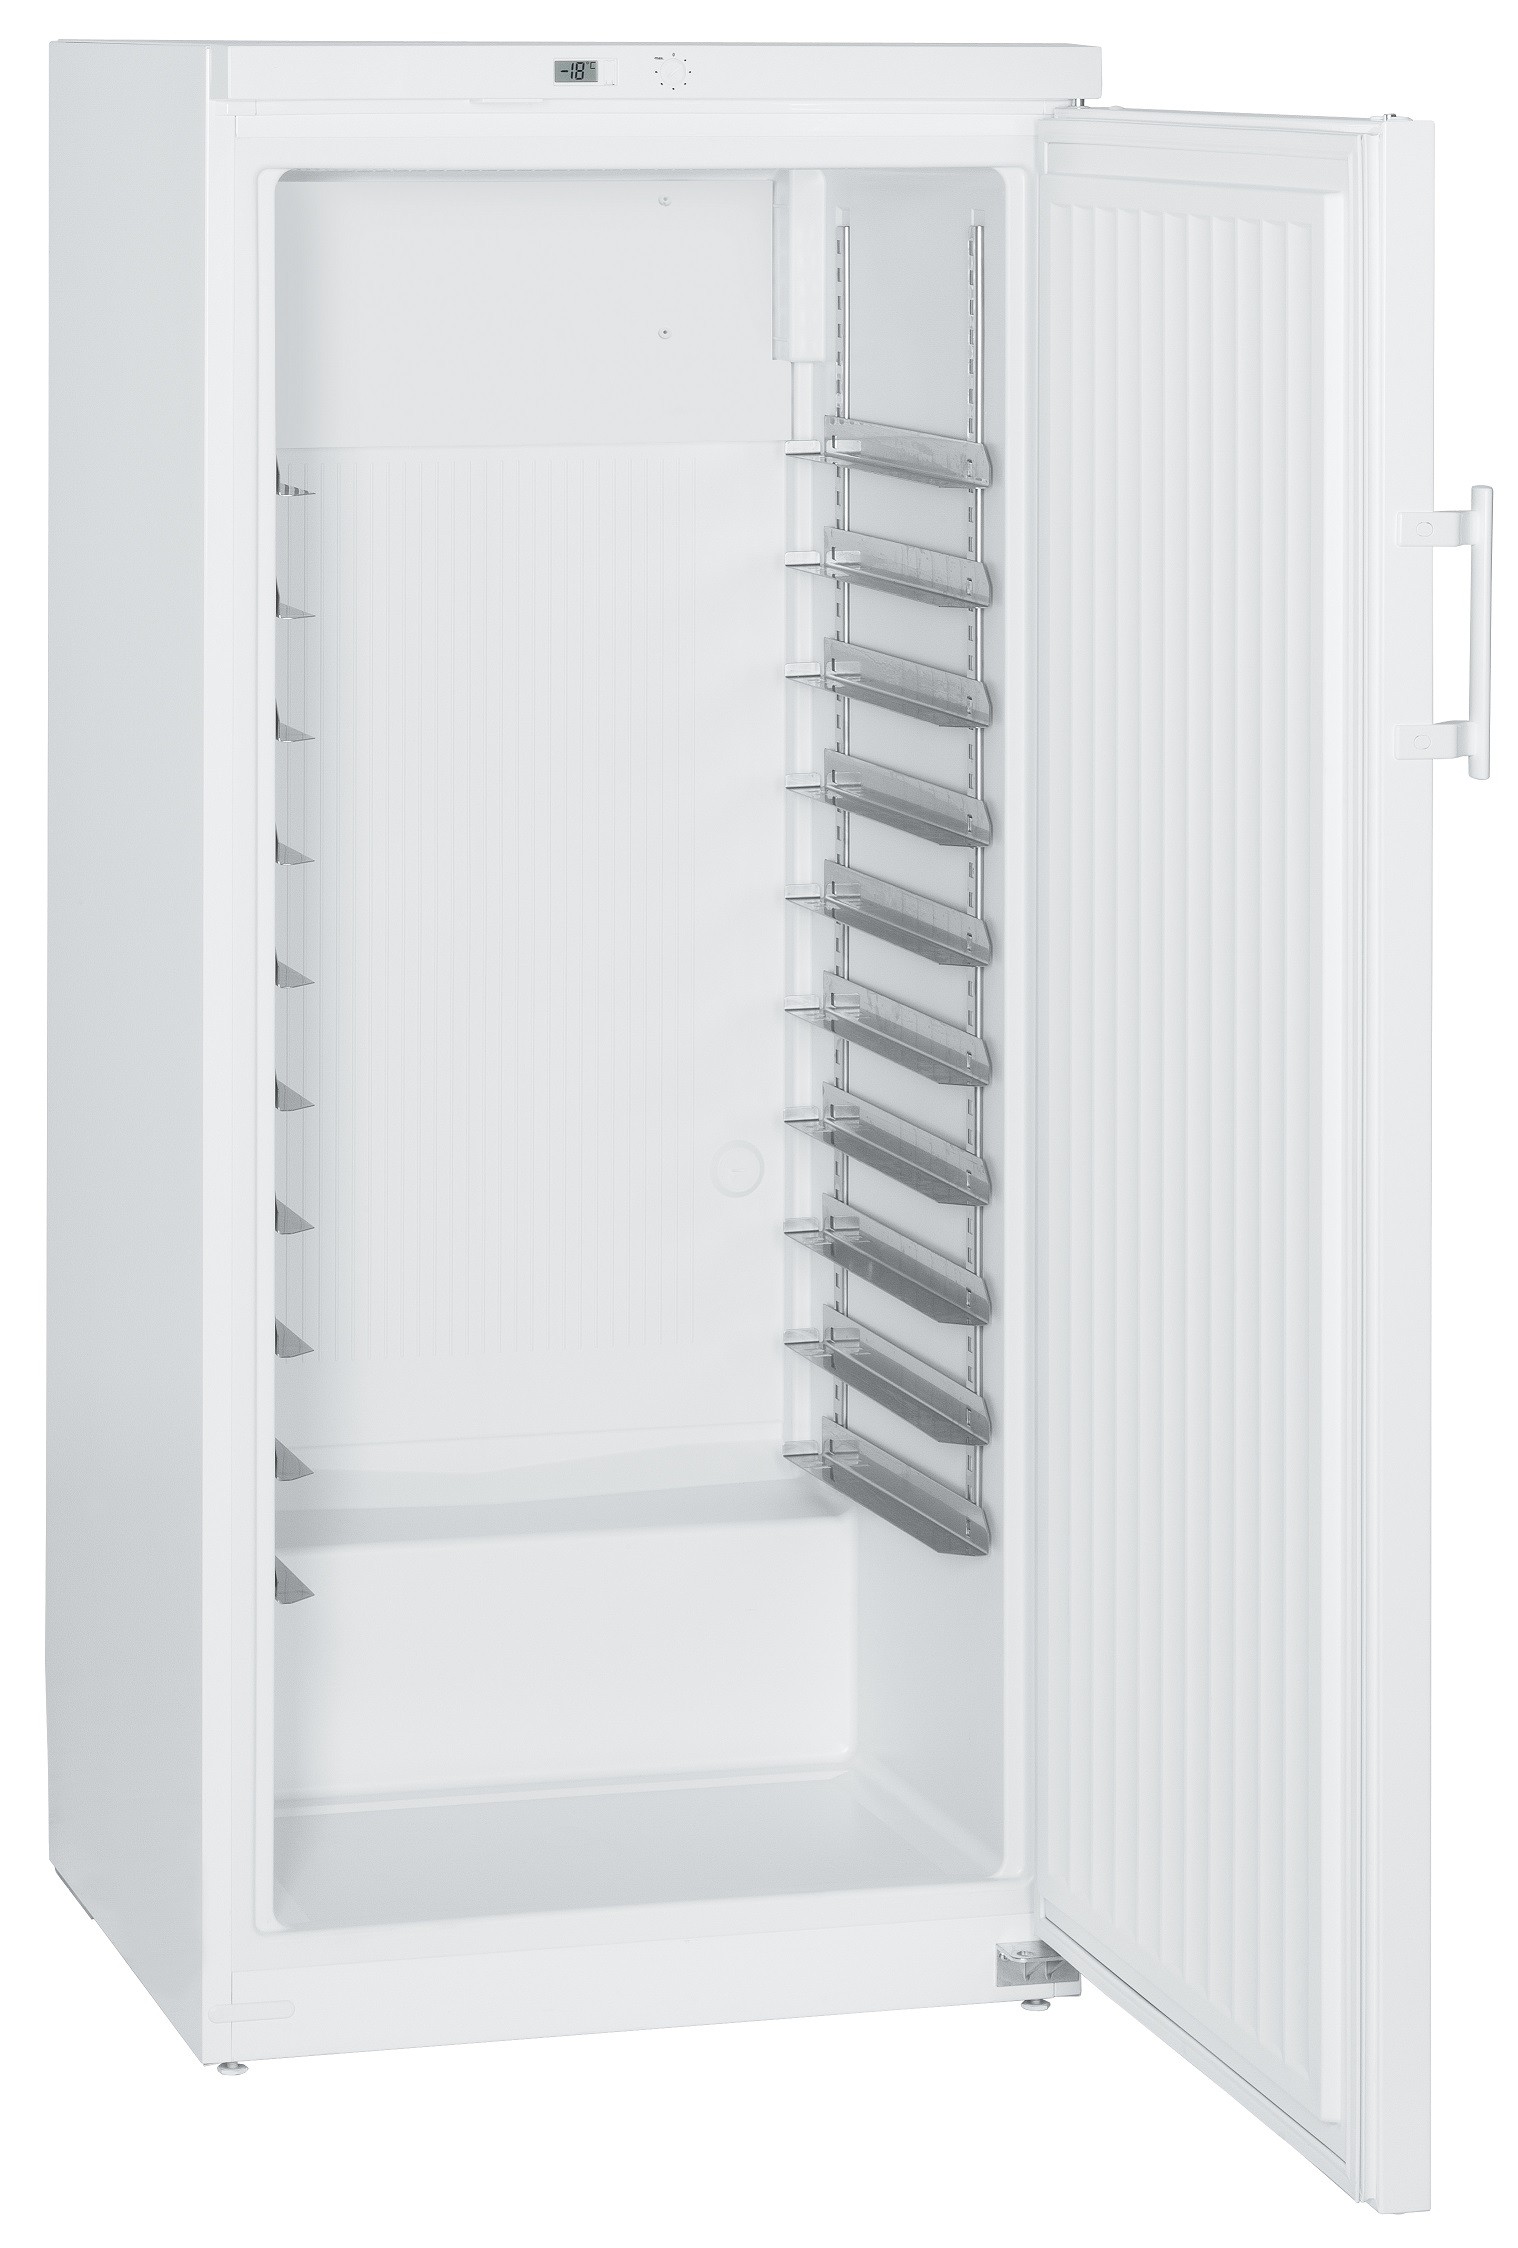 Backwarentiefkühlschrank BTK 500 - NordCap